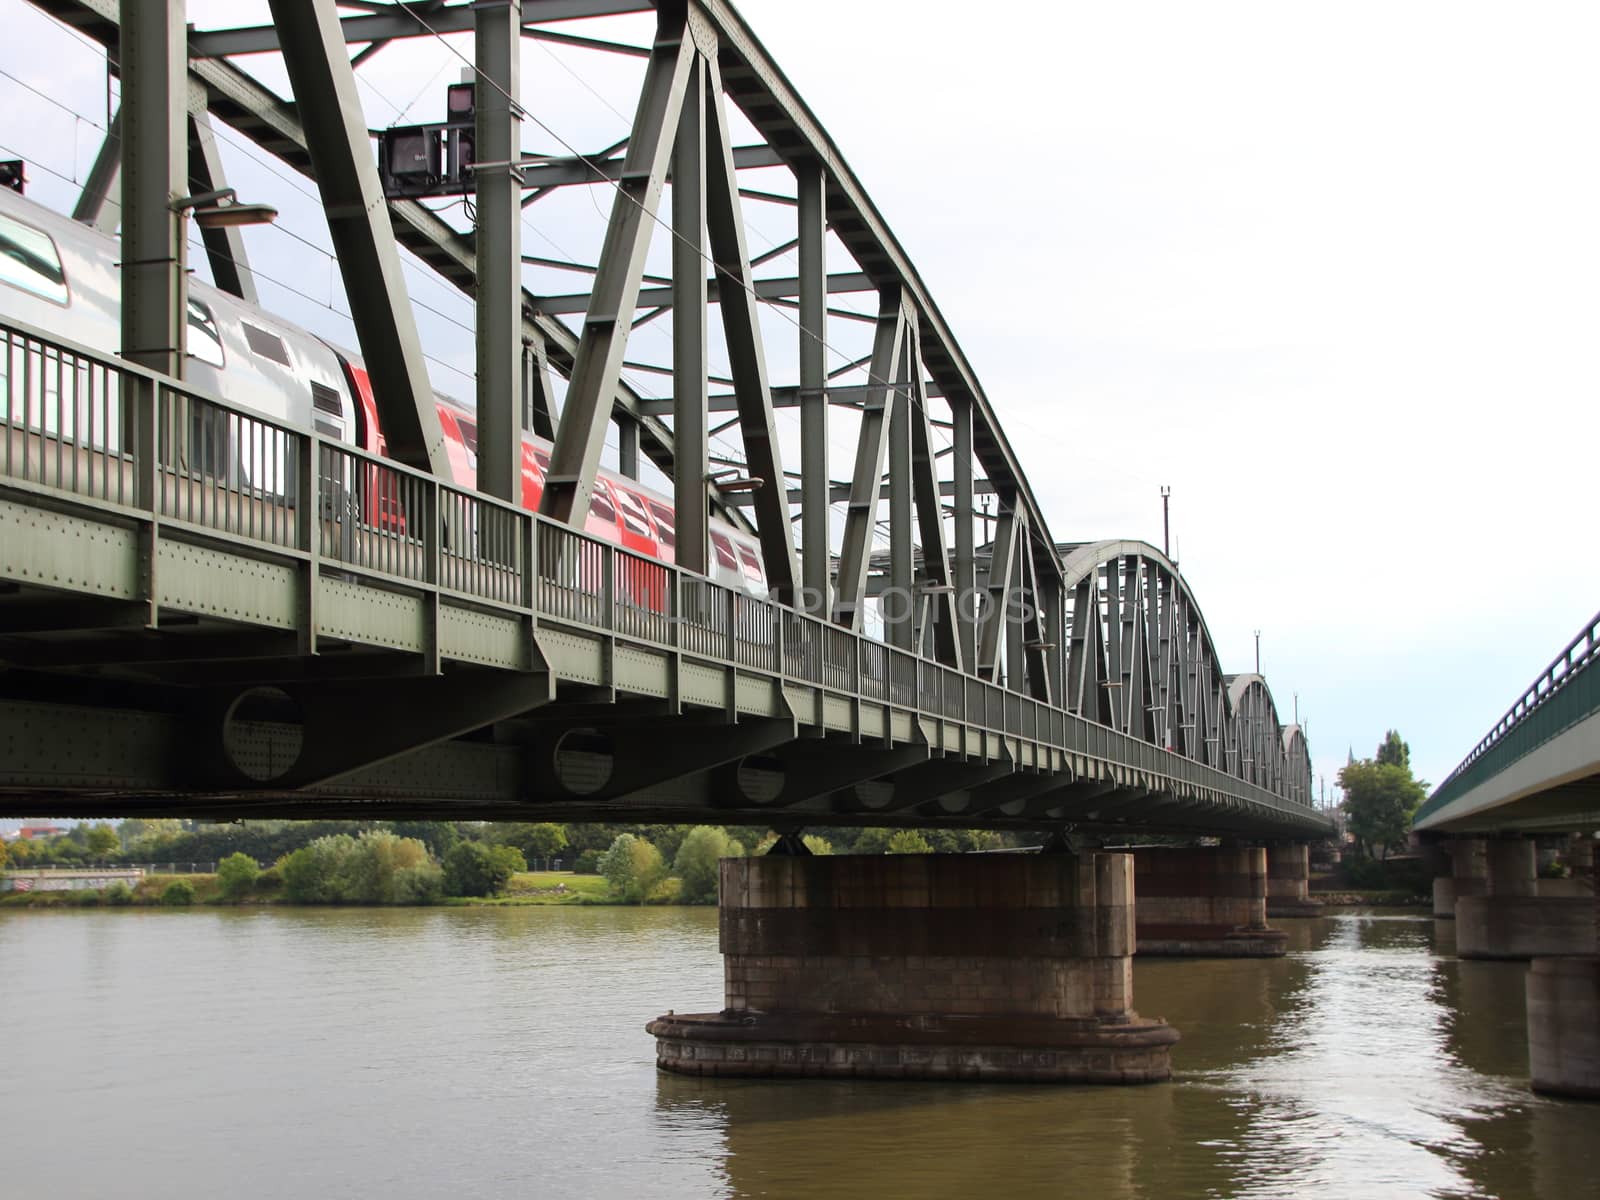 Old Green Metal Railroad Bridge with Train Crossing River